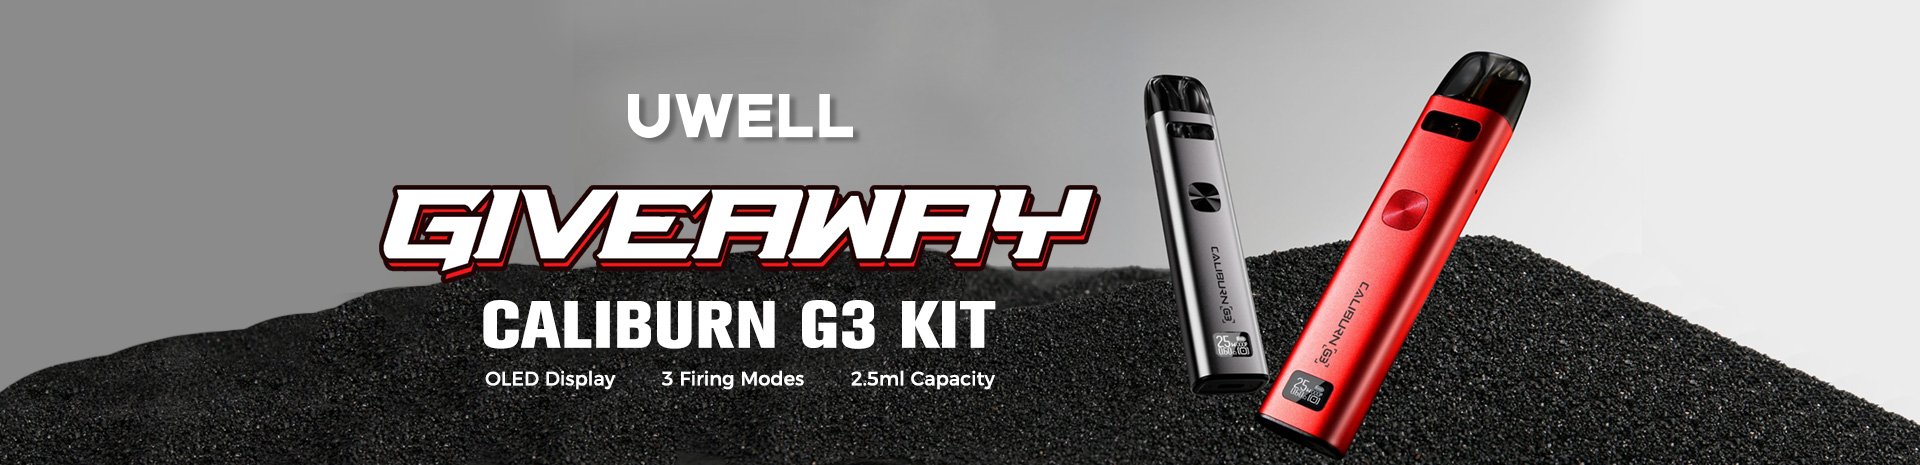 Uwell Caliburn G3 Kit Giveaway